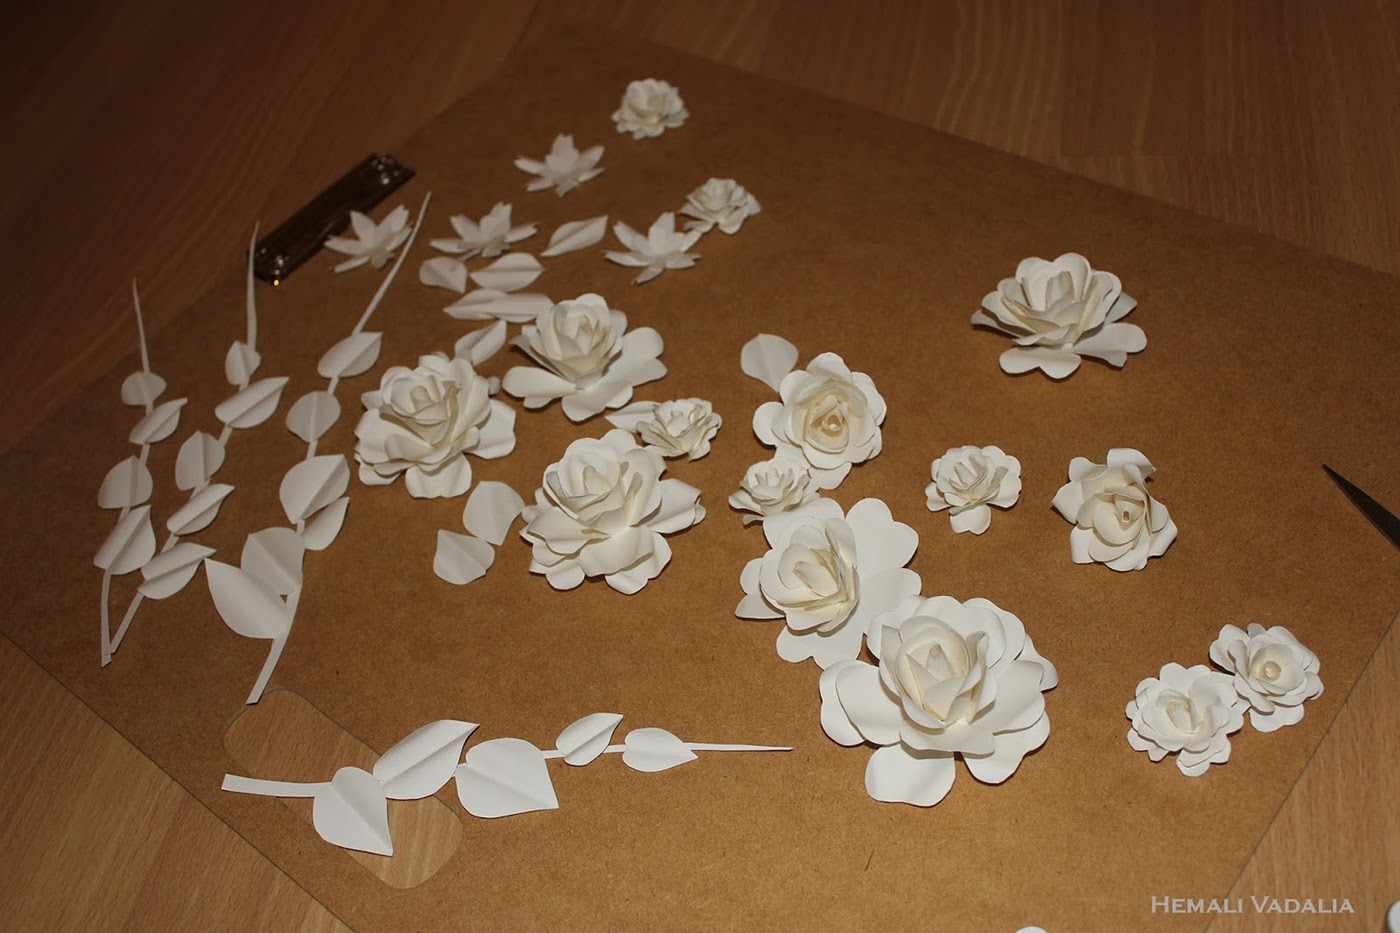 art Classical portraits experimental paper craft paper cutout ink Flowers Gdansk poland